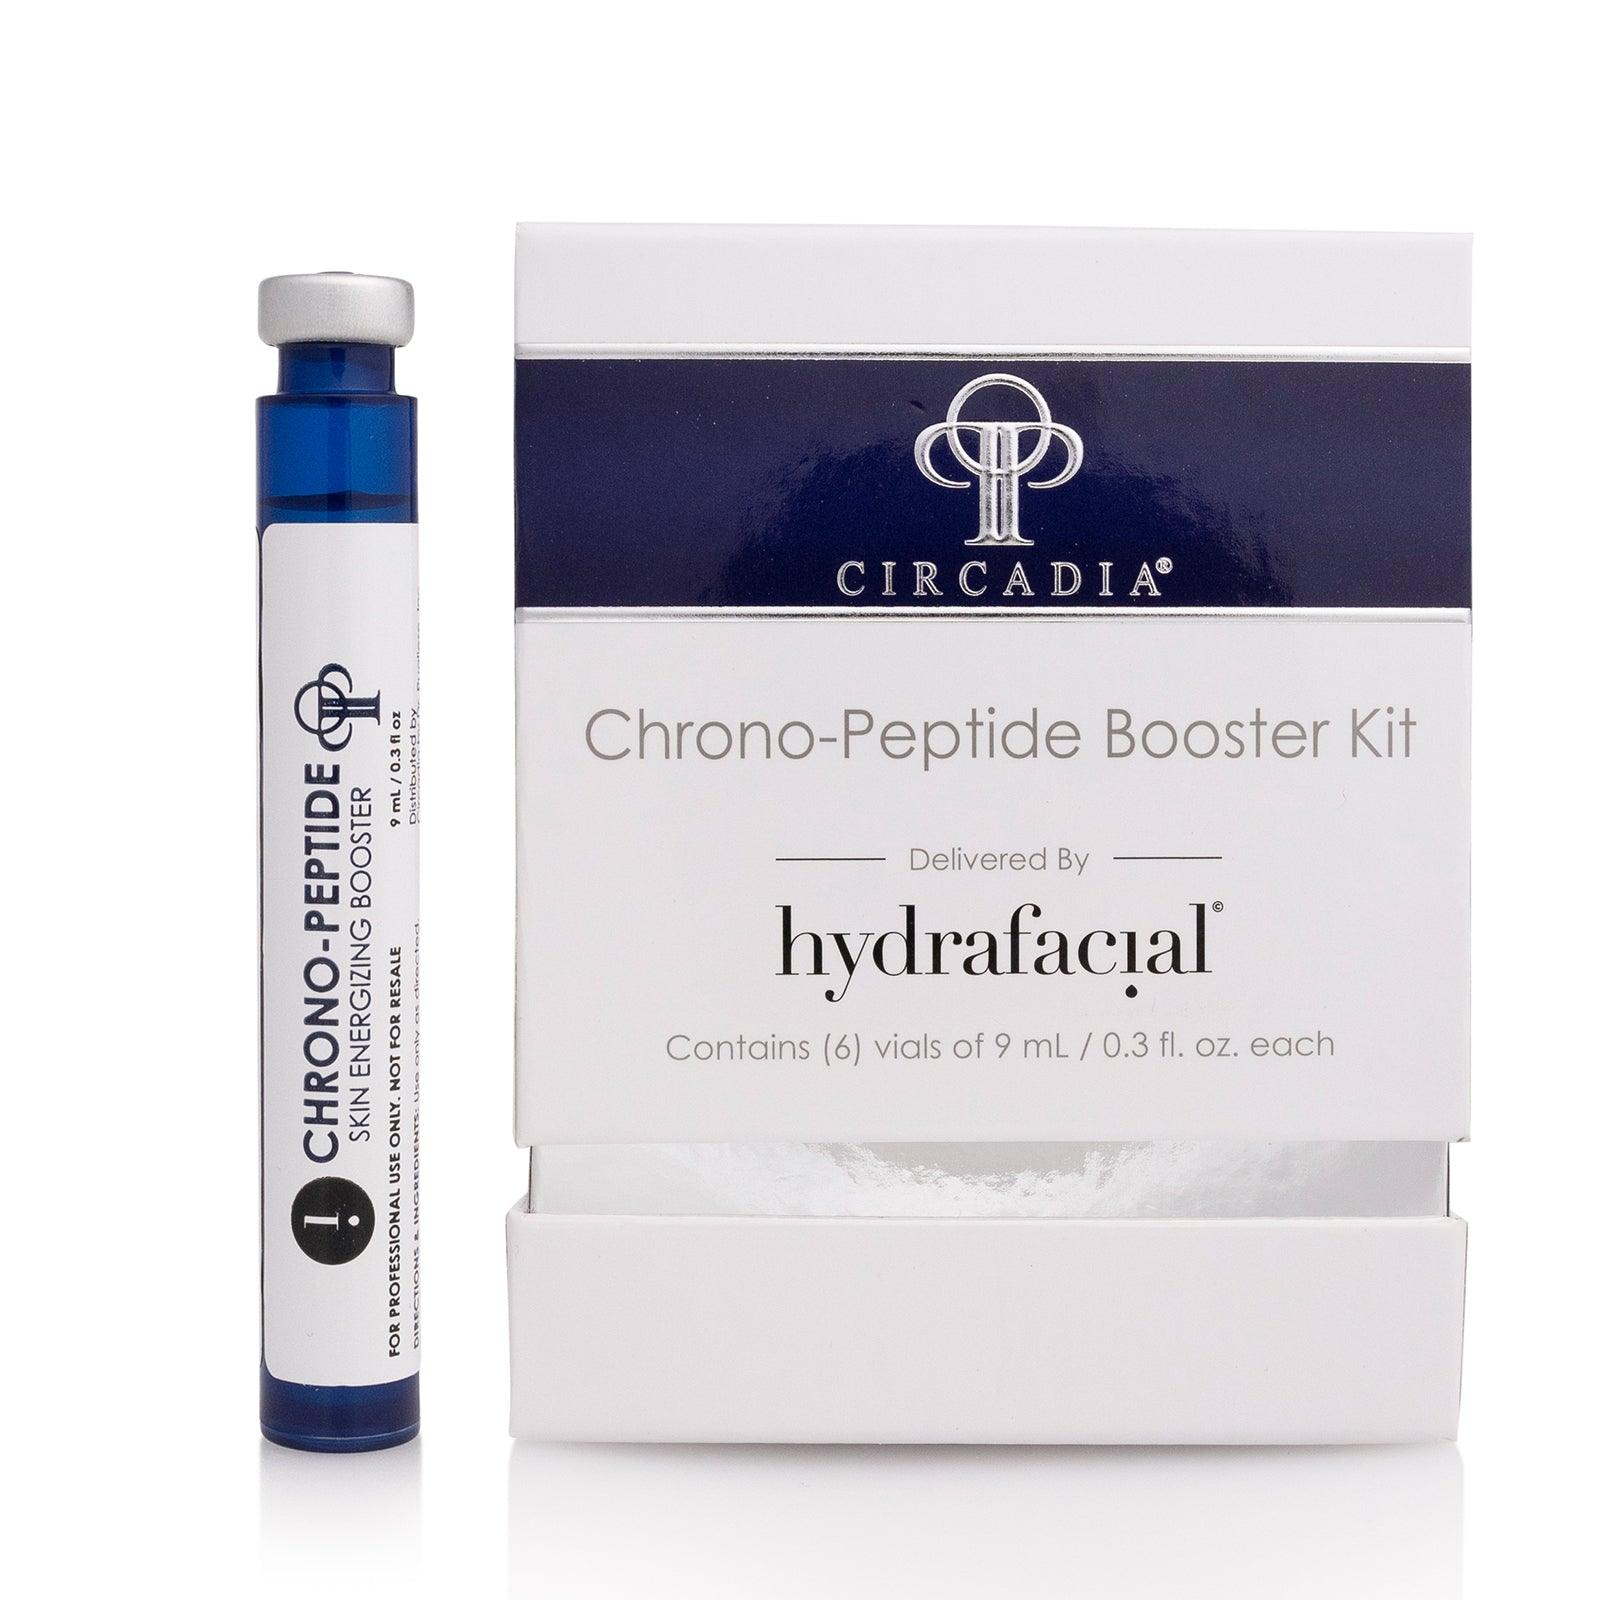 Chrono-Peptide Booster for HydraFacial - CIRCADIA